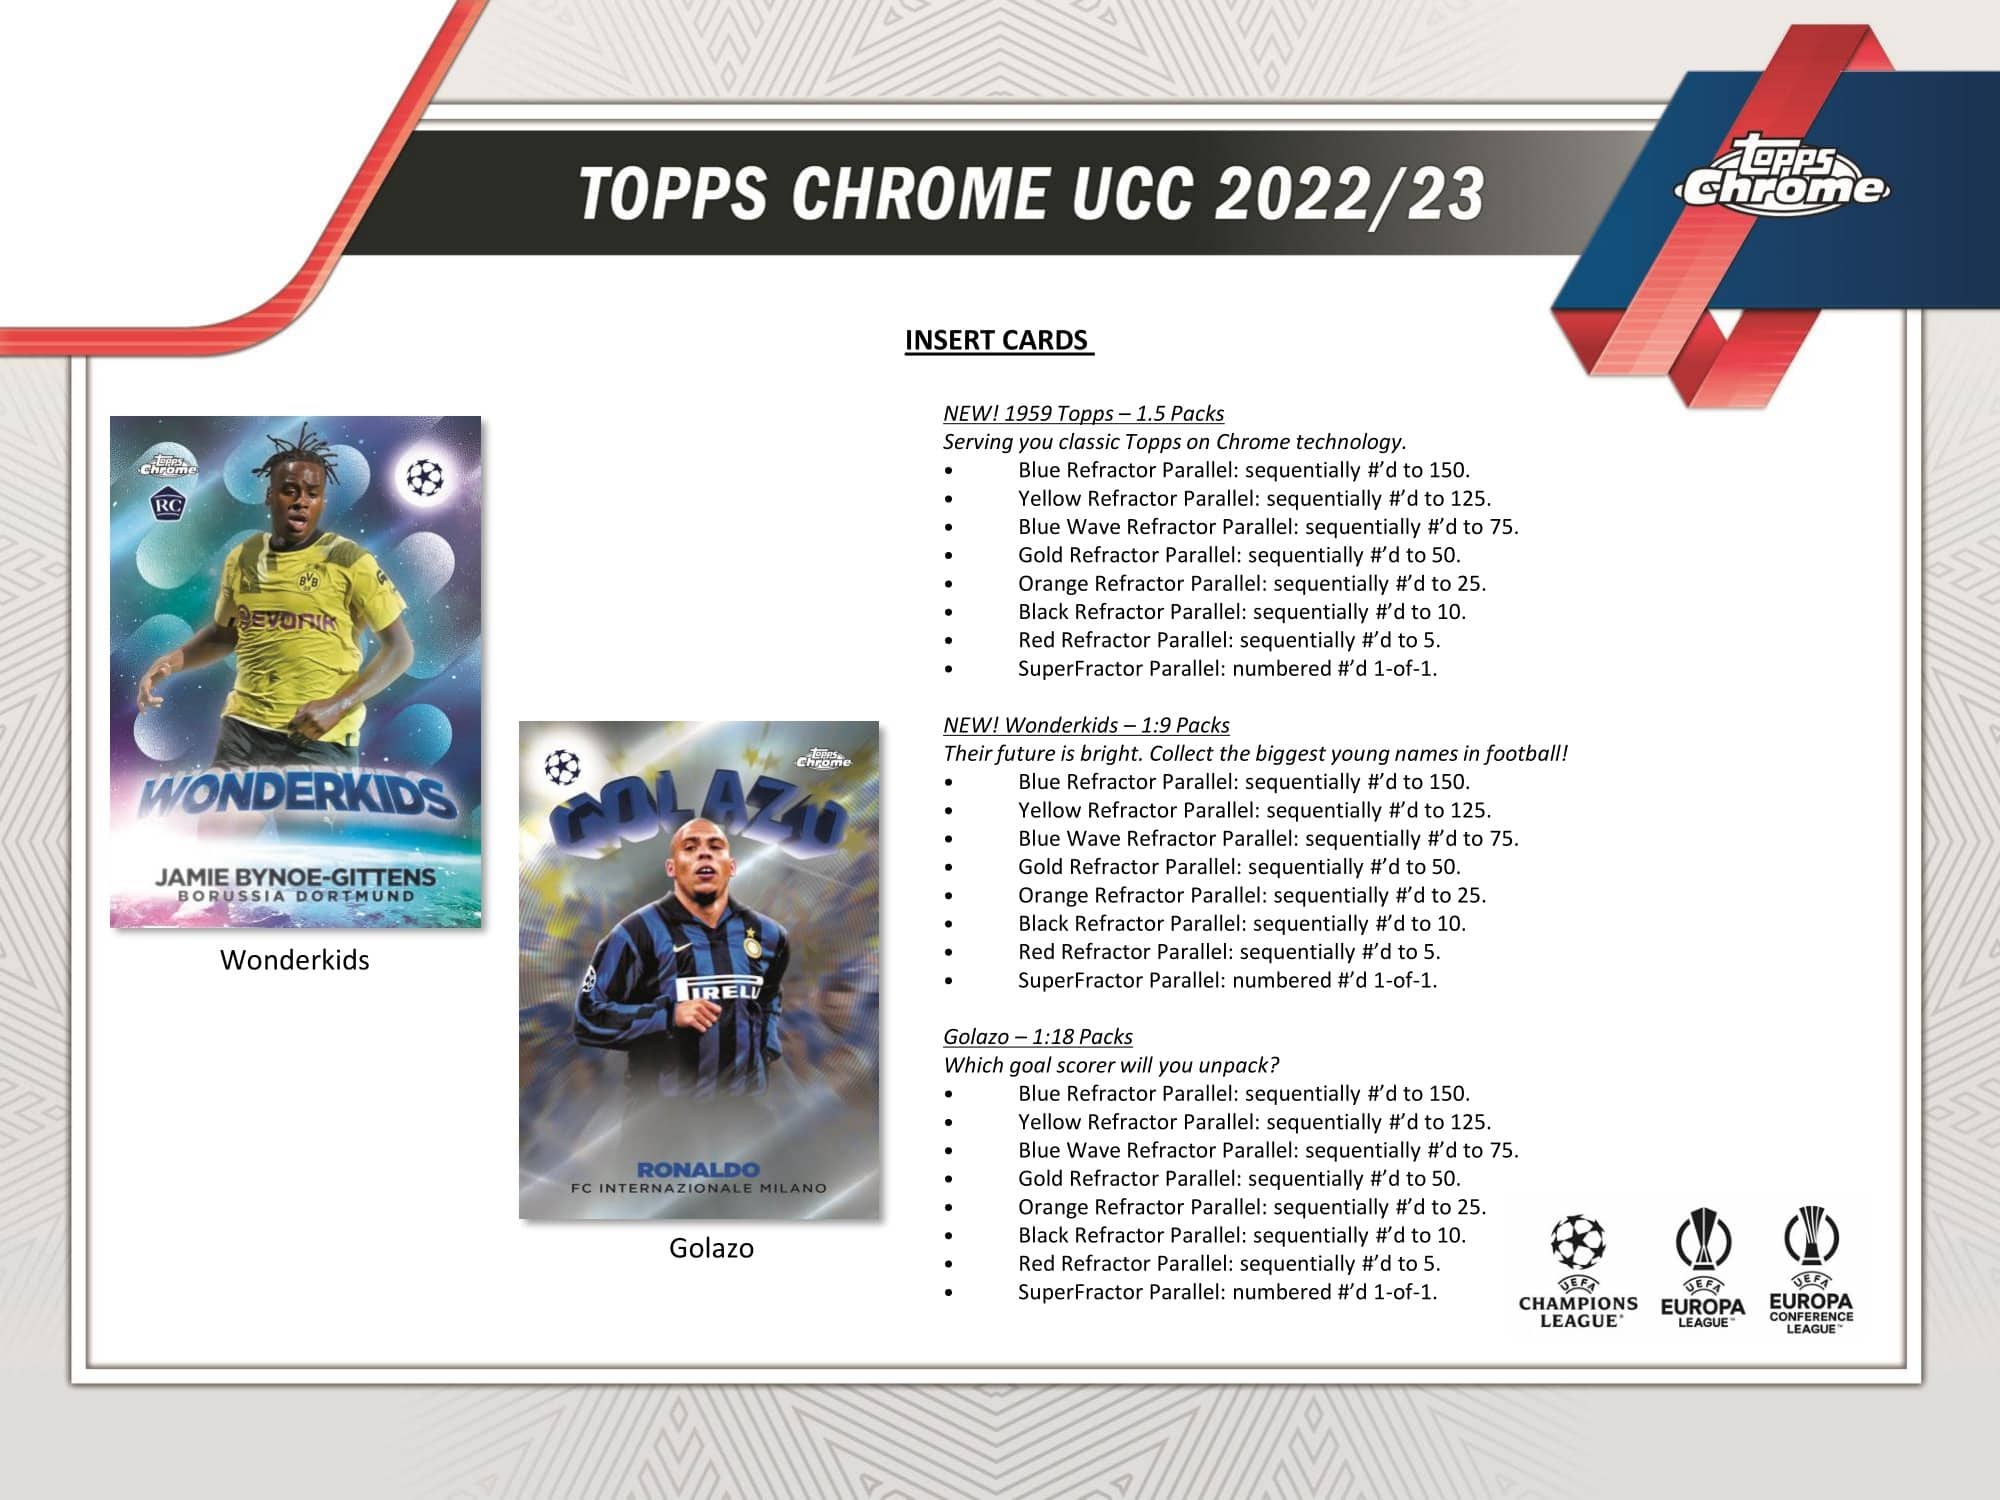 Topps Soccer Chrome UEFA Club Competitions UCC Lite Box - 2022/23